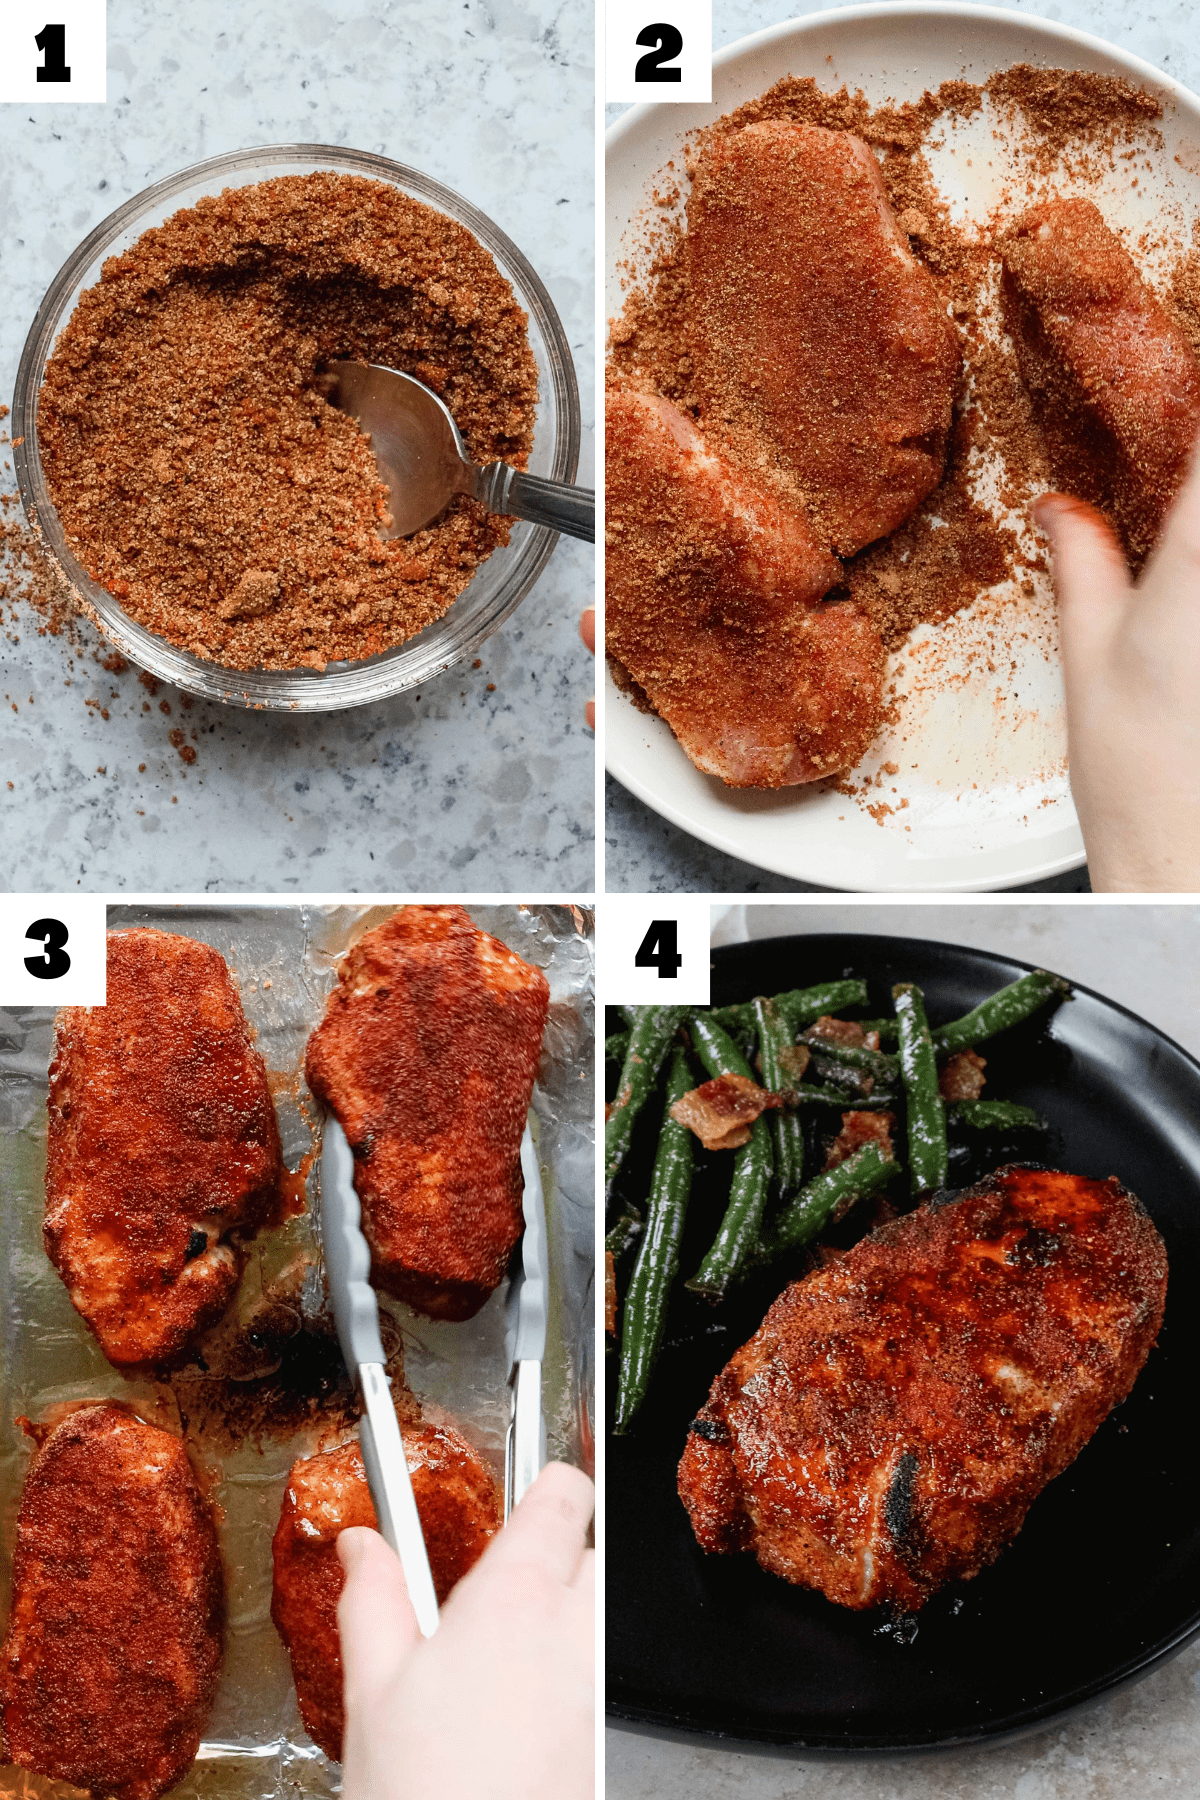 Steps to Make Broiled Pork Chops